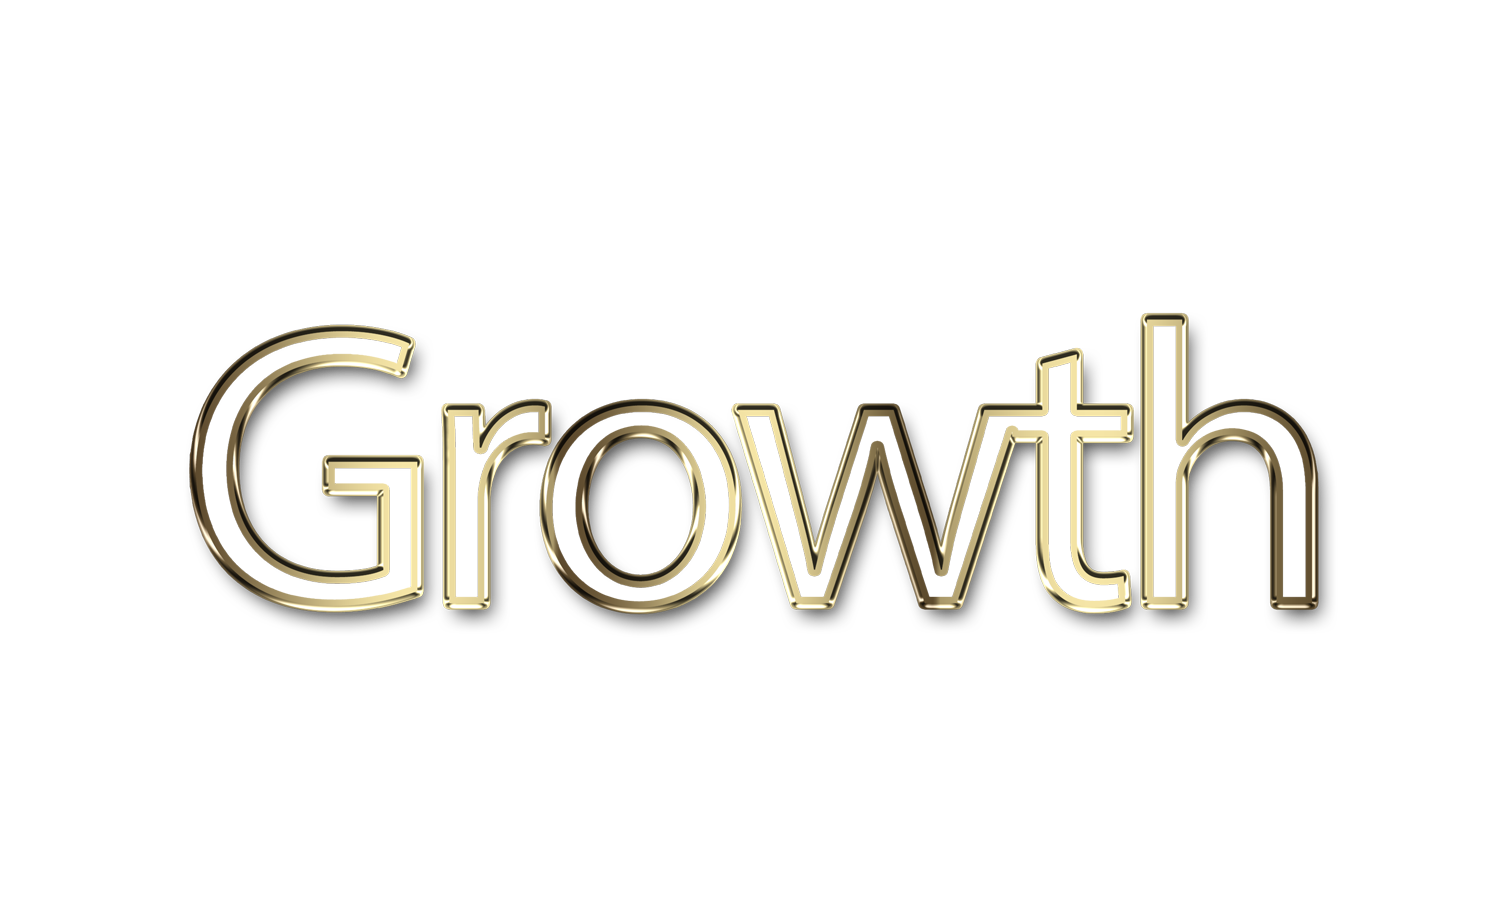 Growth png, word Growth png, Growth word png, Growth text png, Growth letters png, Growth word art typography PNG images, transparent png